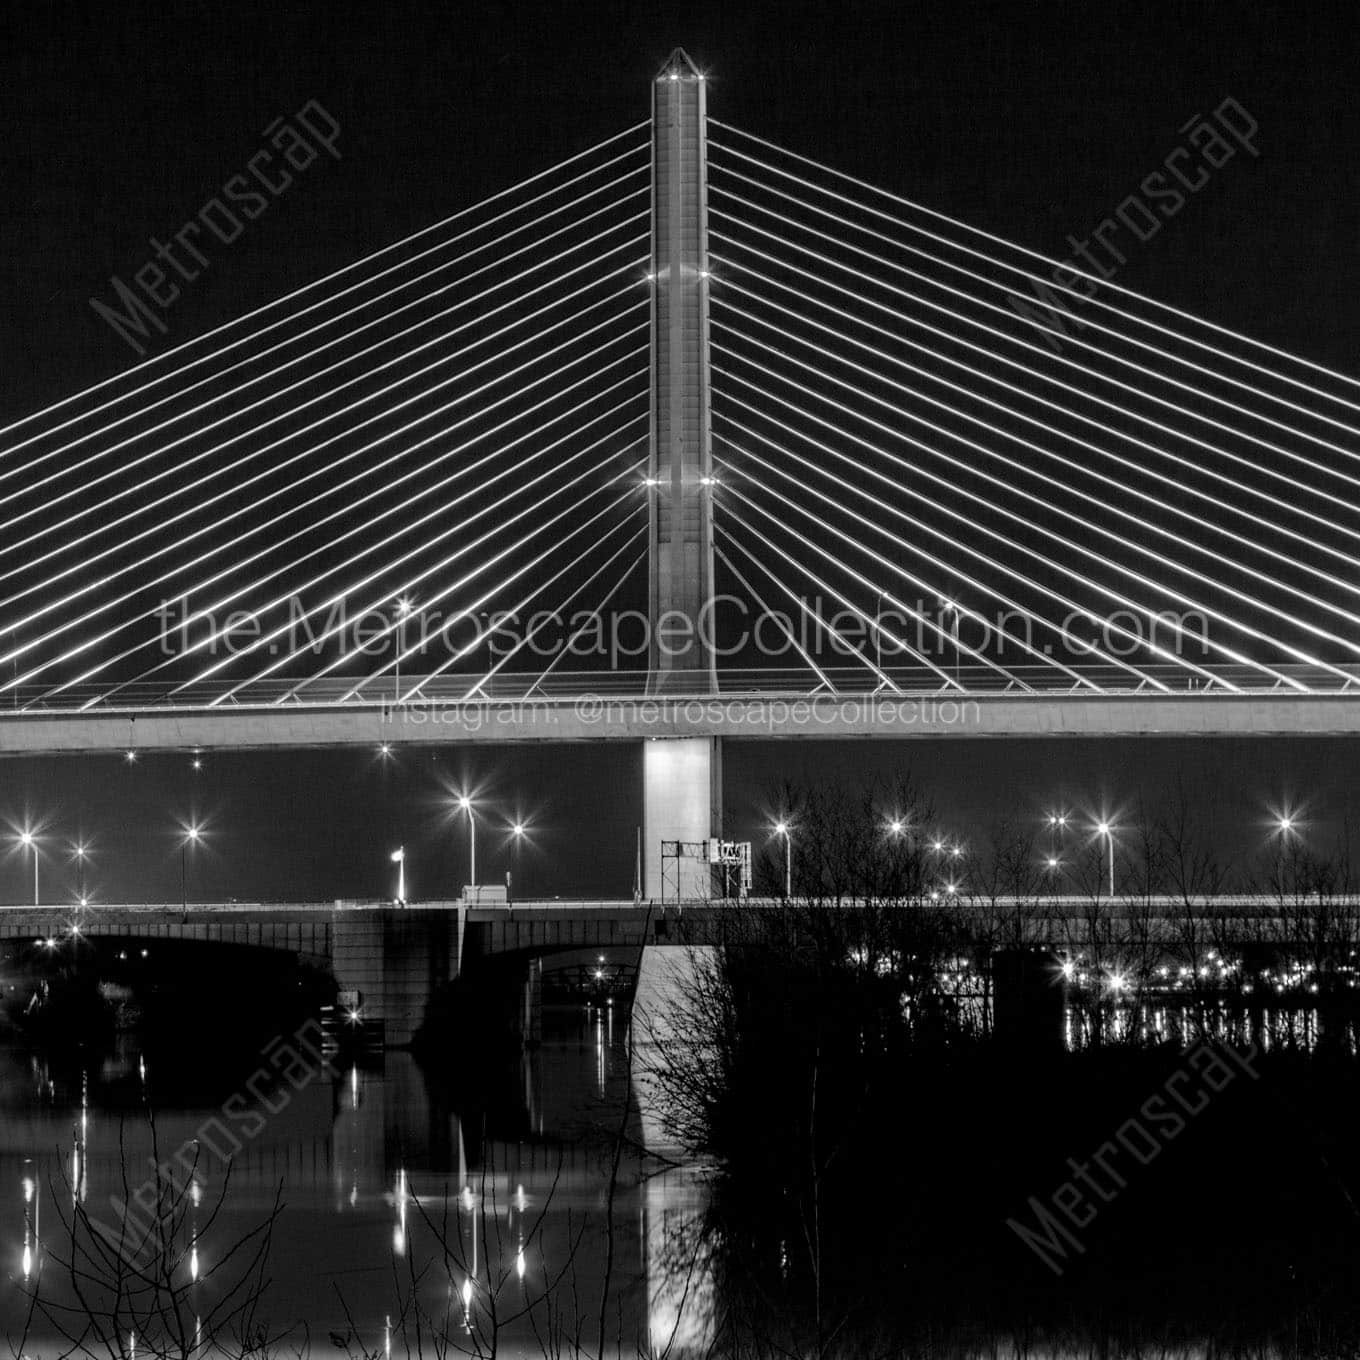 i280 veterans glass city skyway bridge over maumee river Black & White Office Art